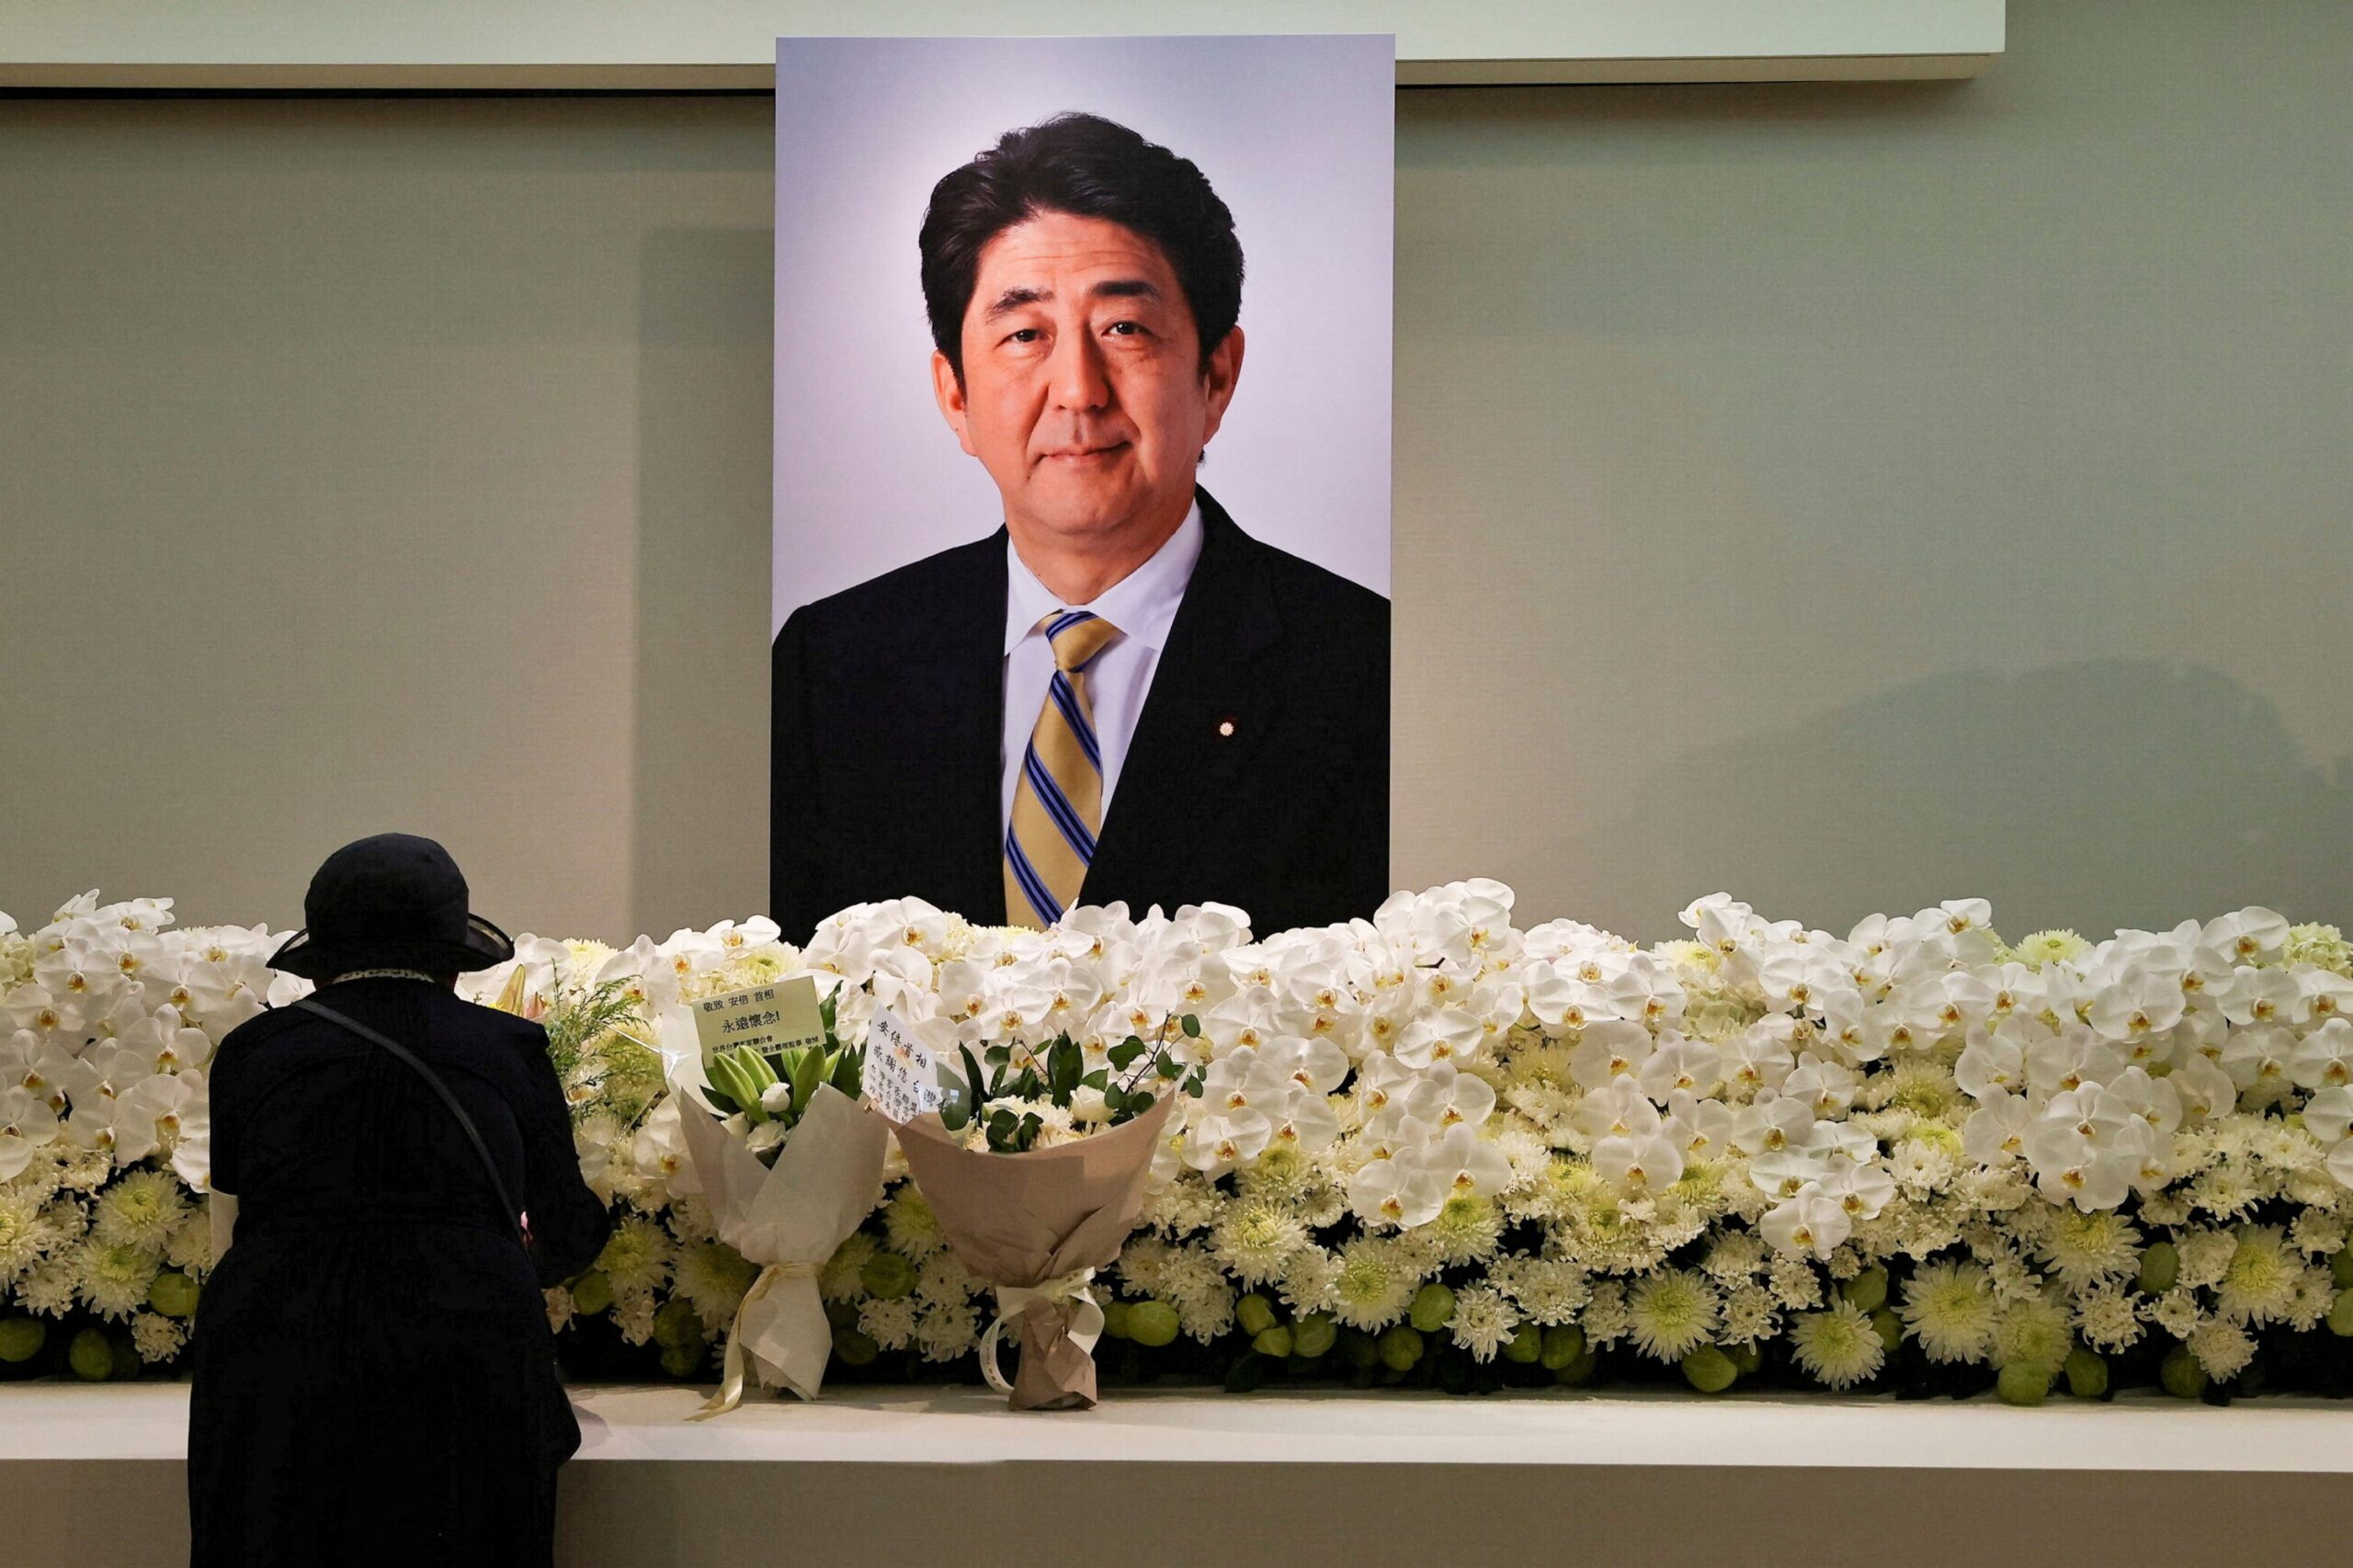 Shinzo Abe death